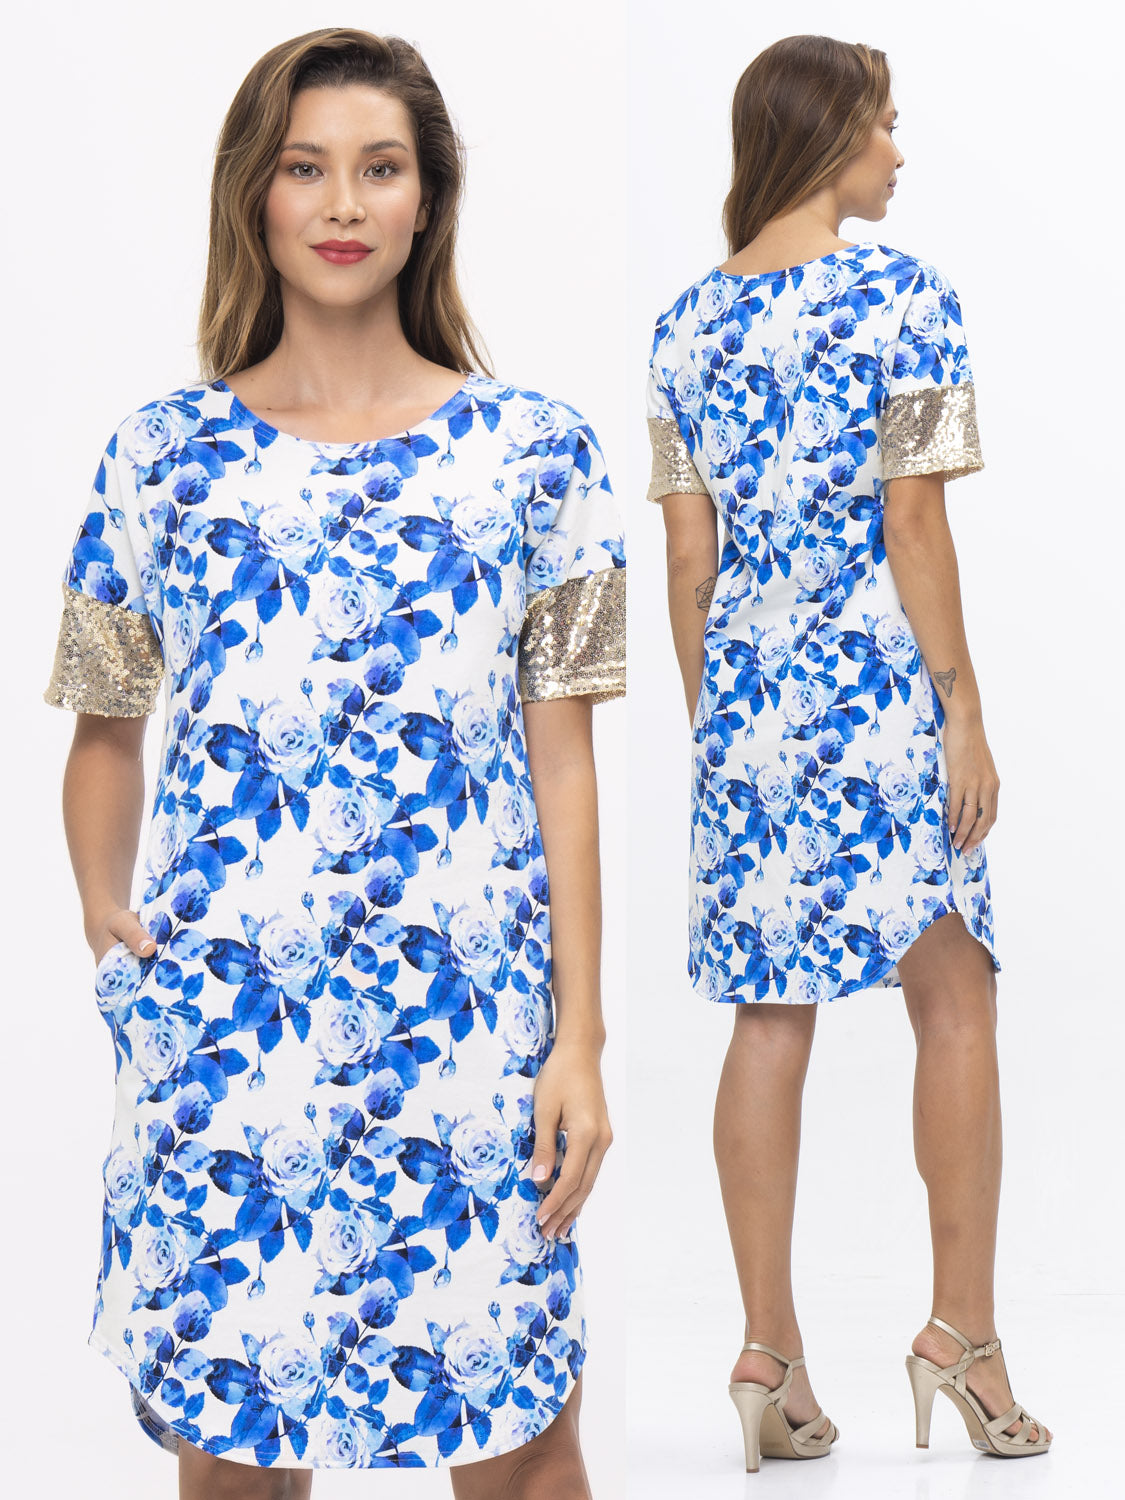 women's t shirt dress sewing pattern